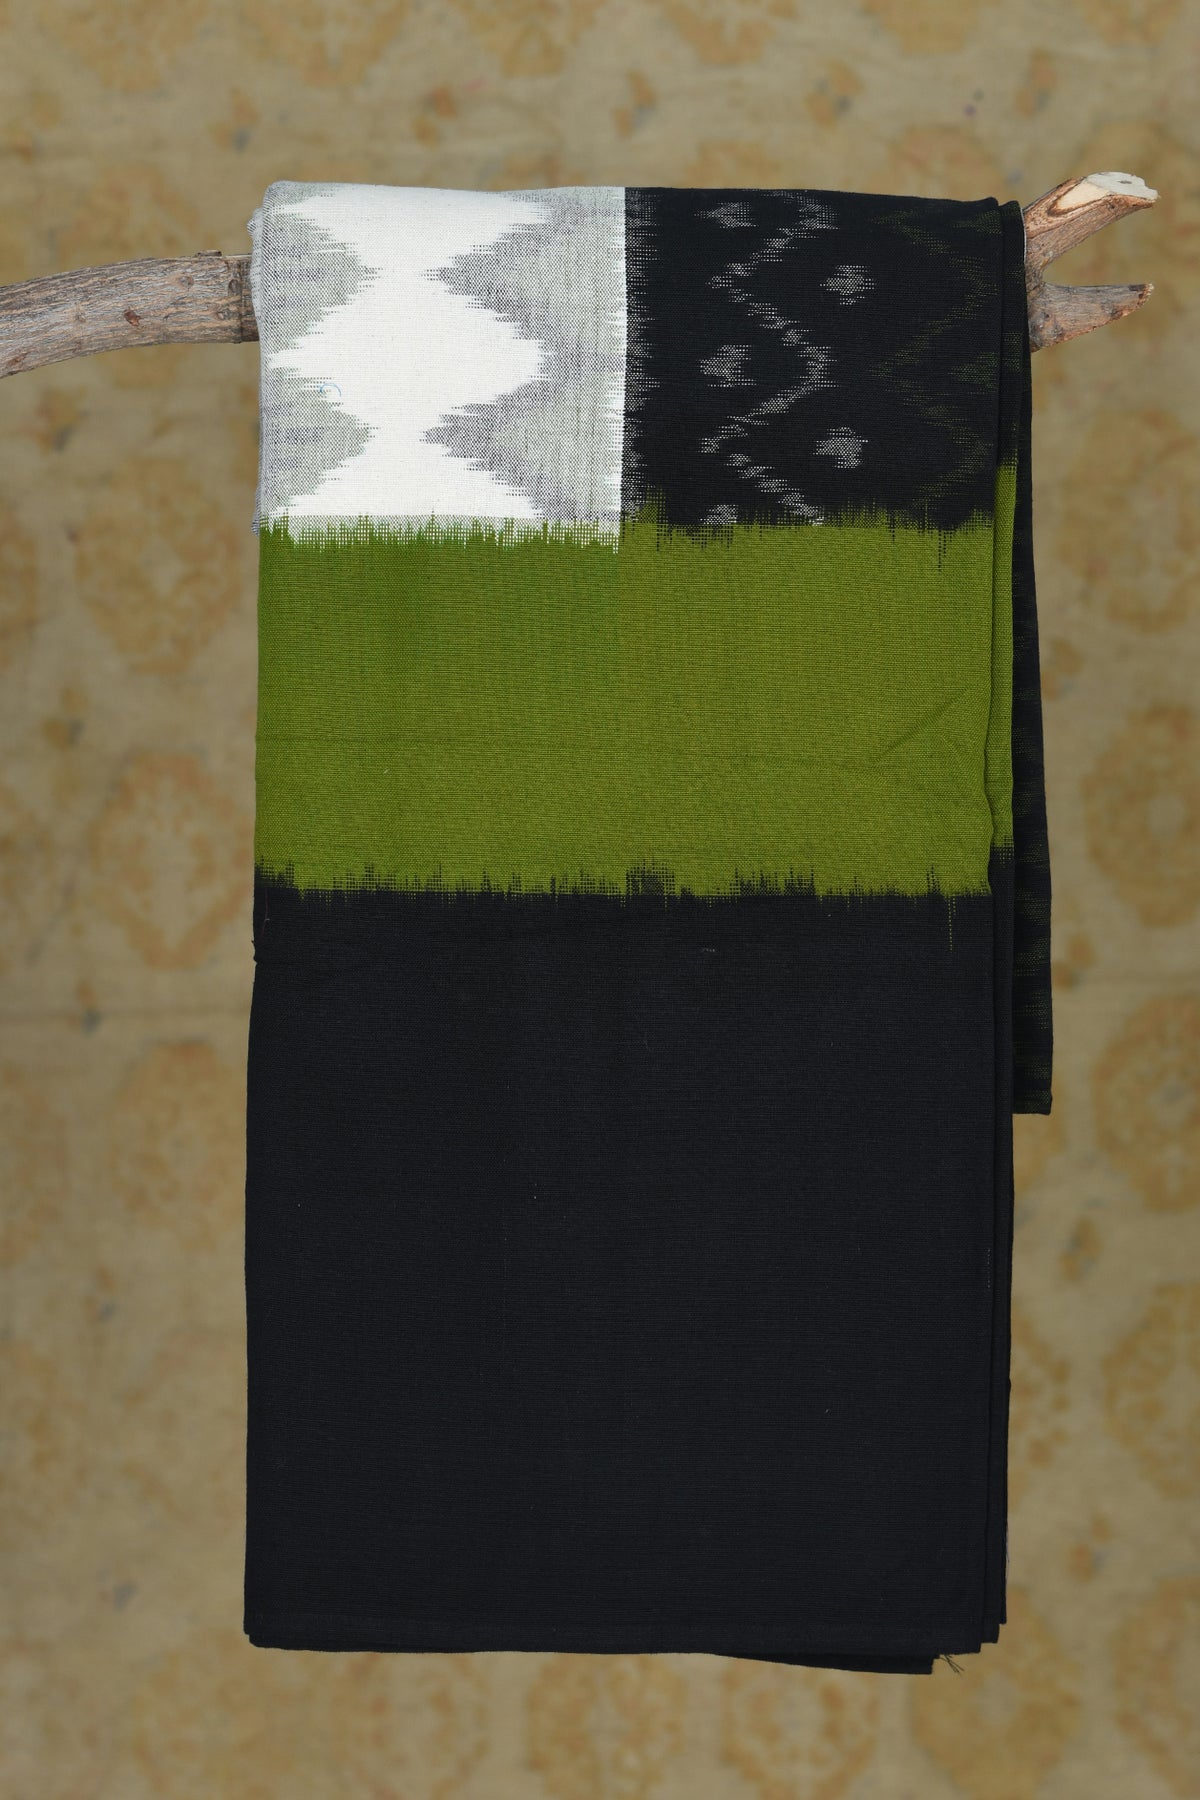 Ikat Design Tricolor Printed Cotton Double Bedspread